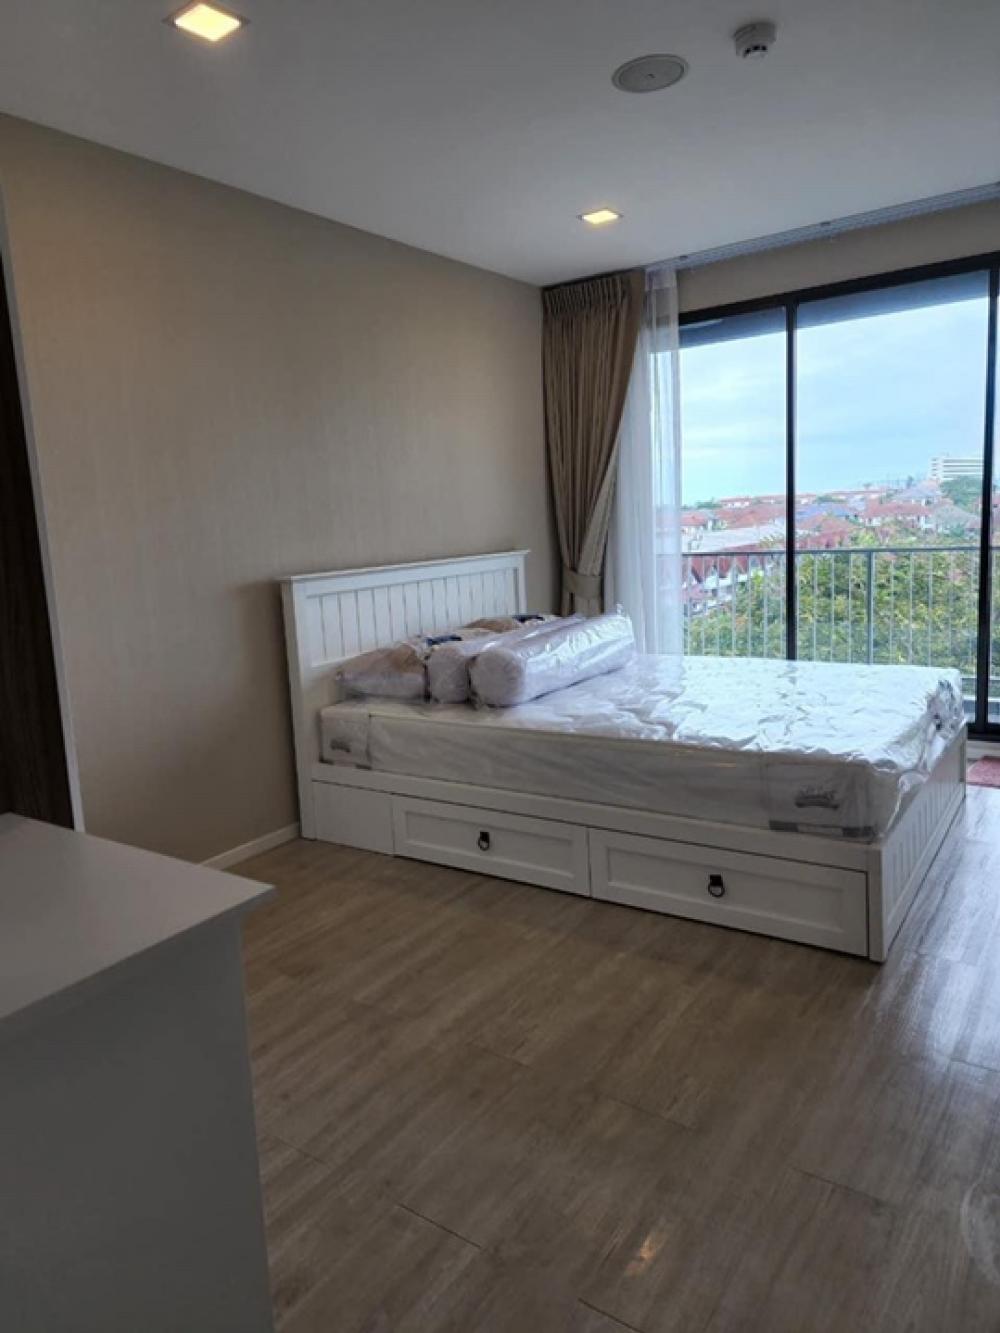 For RentCondoChokchai 4, Ladprao 71, Ladprao 48, : 🔥14277 Condo for rent Atmoz Ladprao 71 📍1 Bed Plus+ 📍🎈1 Master bedroom